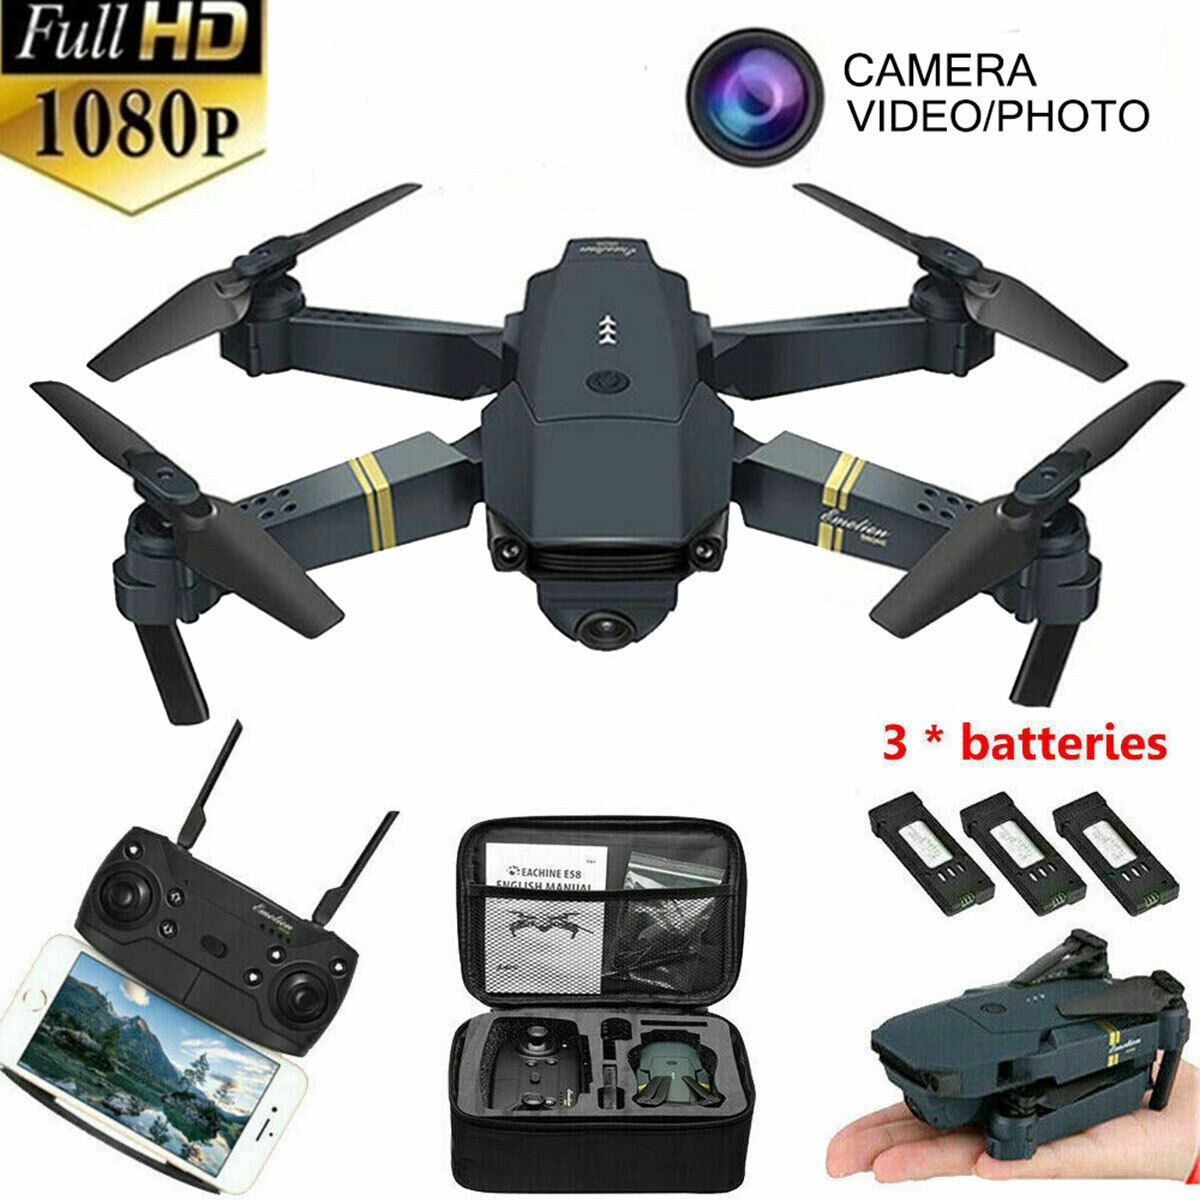 Drone X Pro WIFI FPV 4K HD Camera 3Batteries Foldable Selfie RC Quadcopter Black